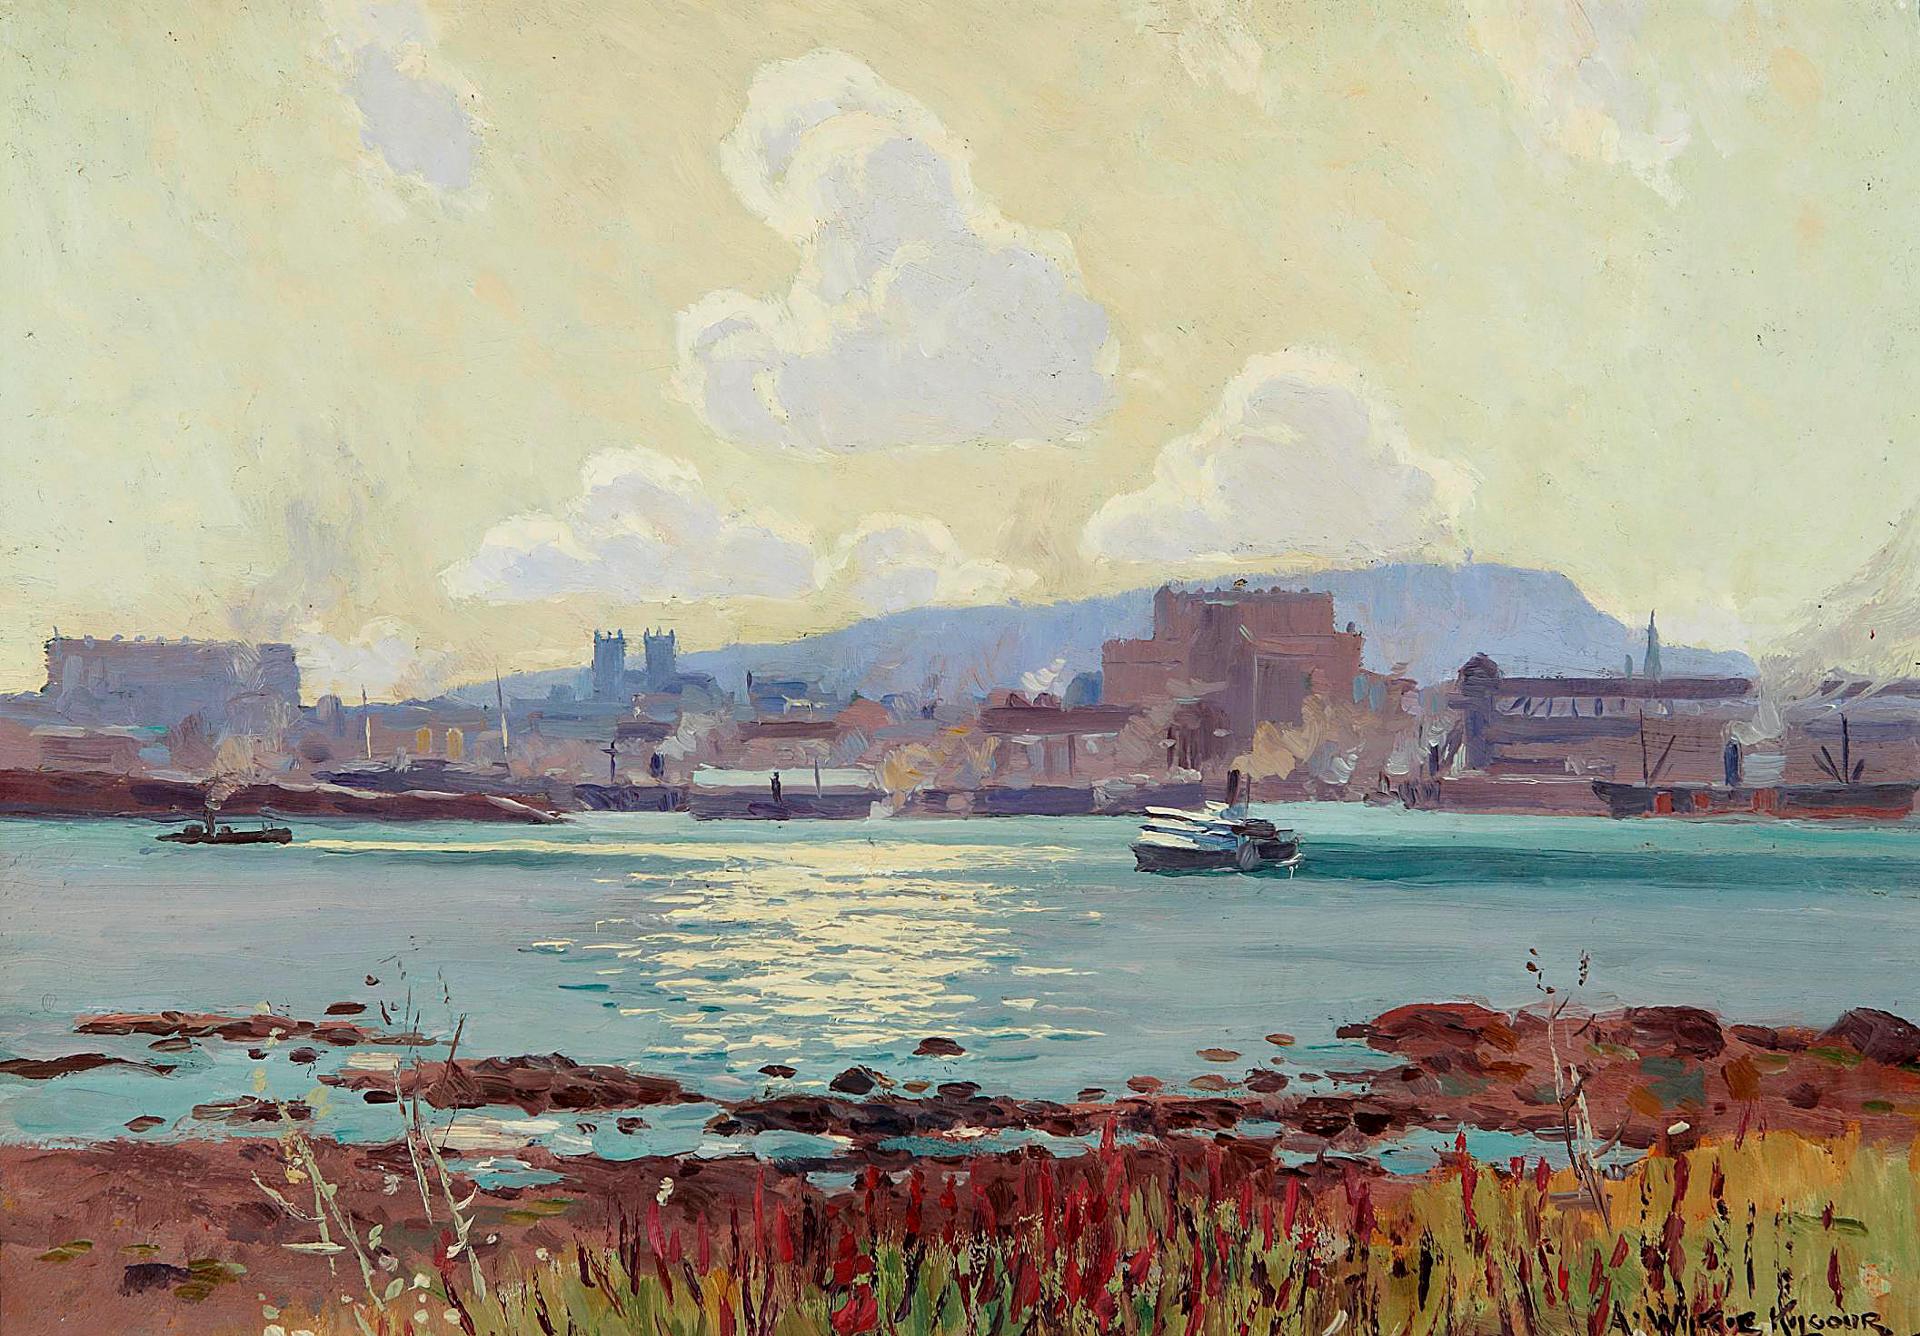 Andrew Wilkie Kilgour (1860-1930) - From St.Helen's Island